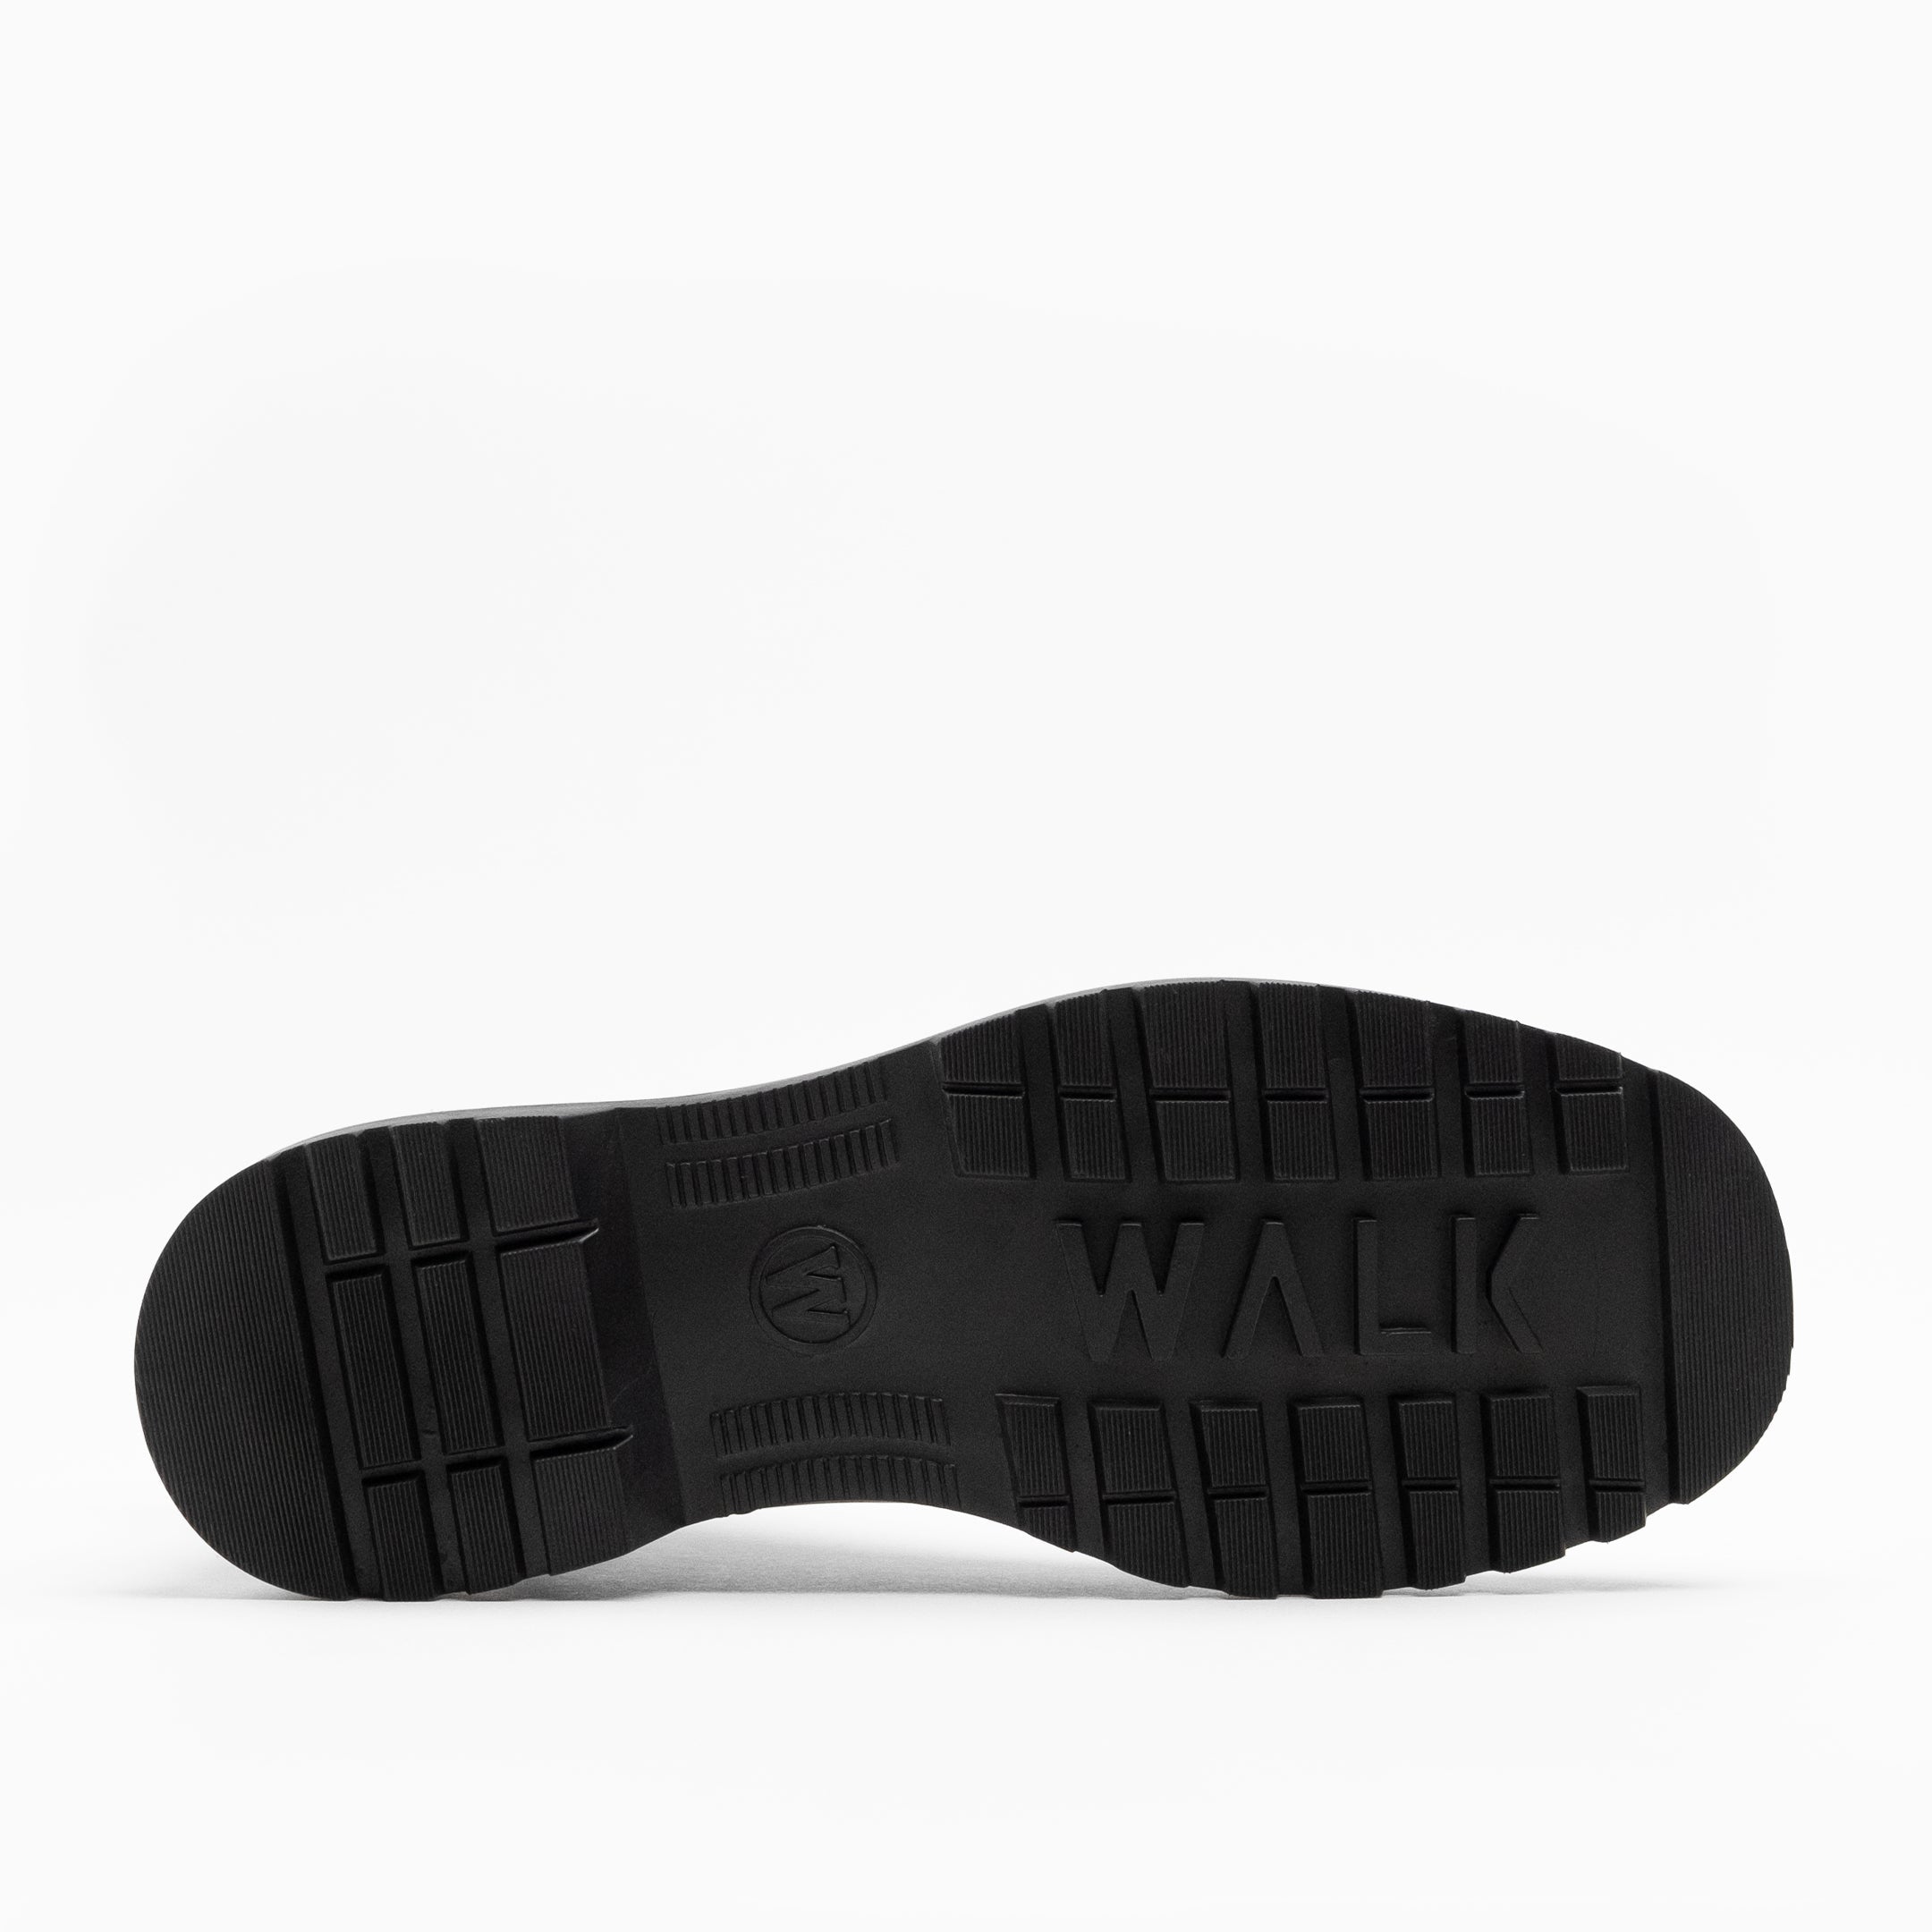 Walk London Mens - Milano Inside Zip Boot - Brown Leather